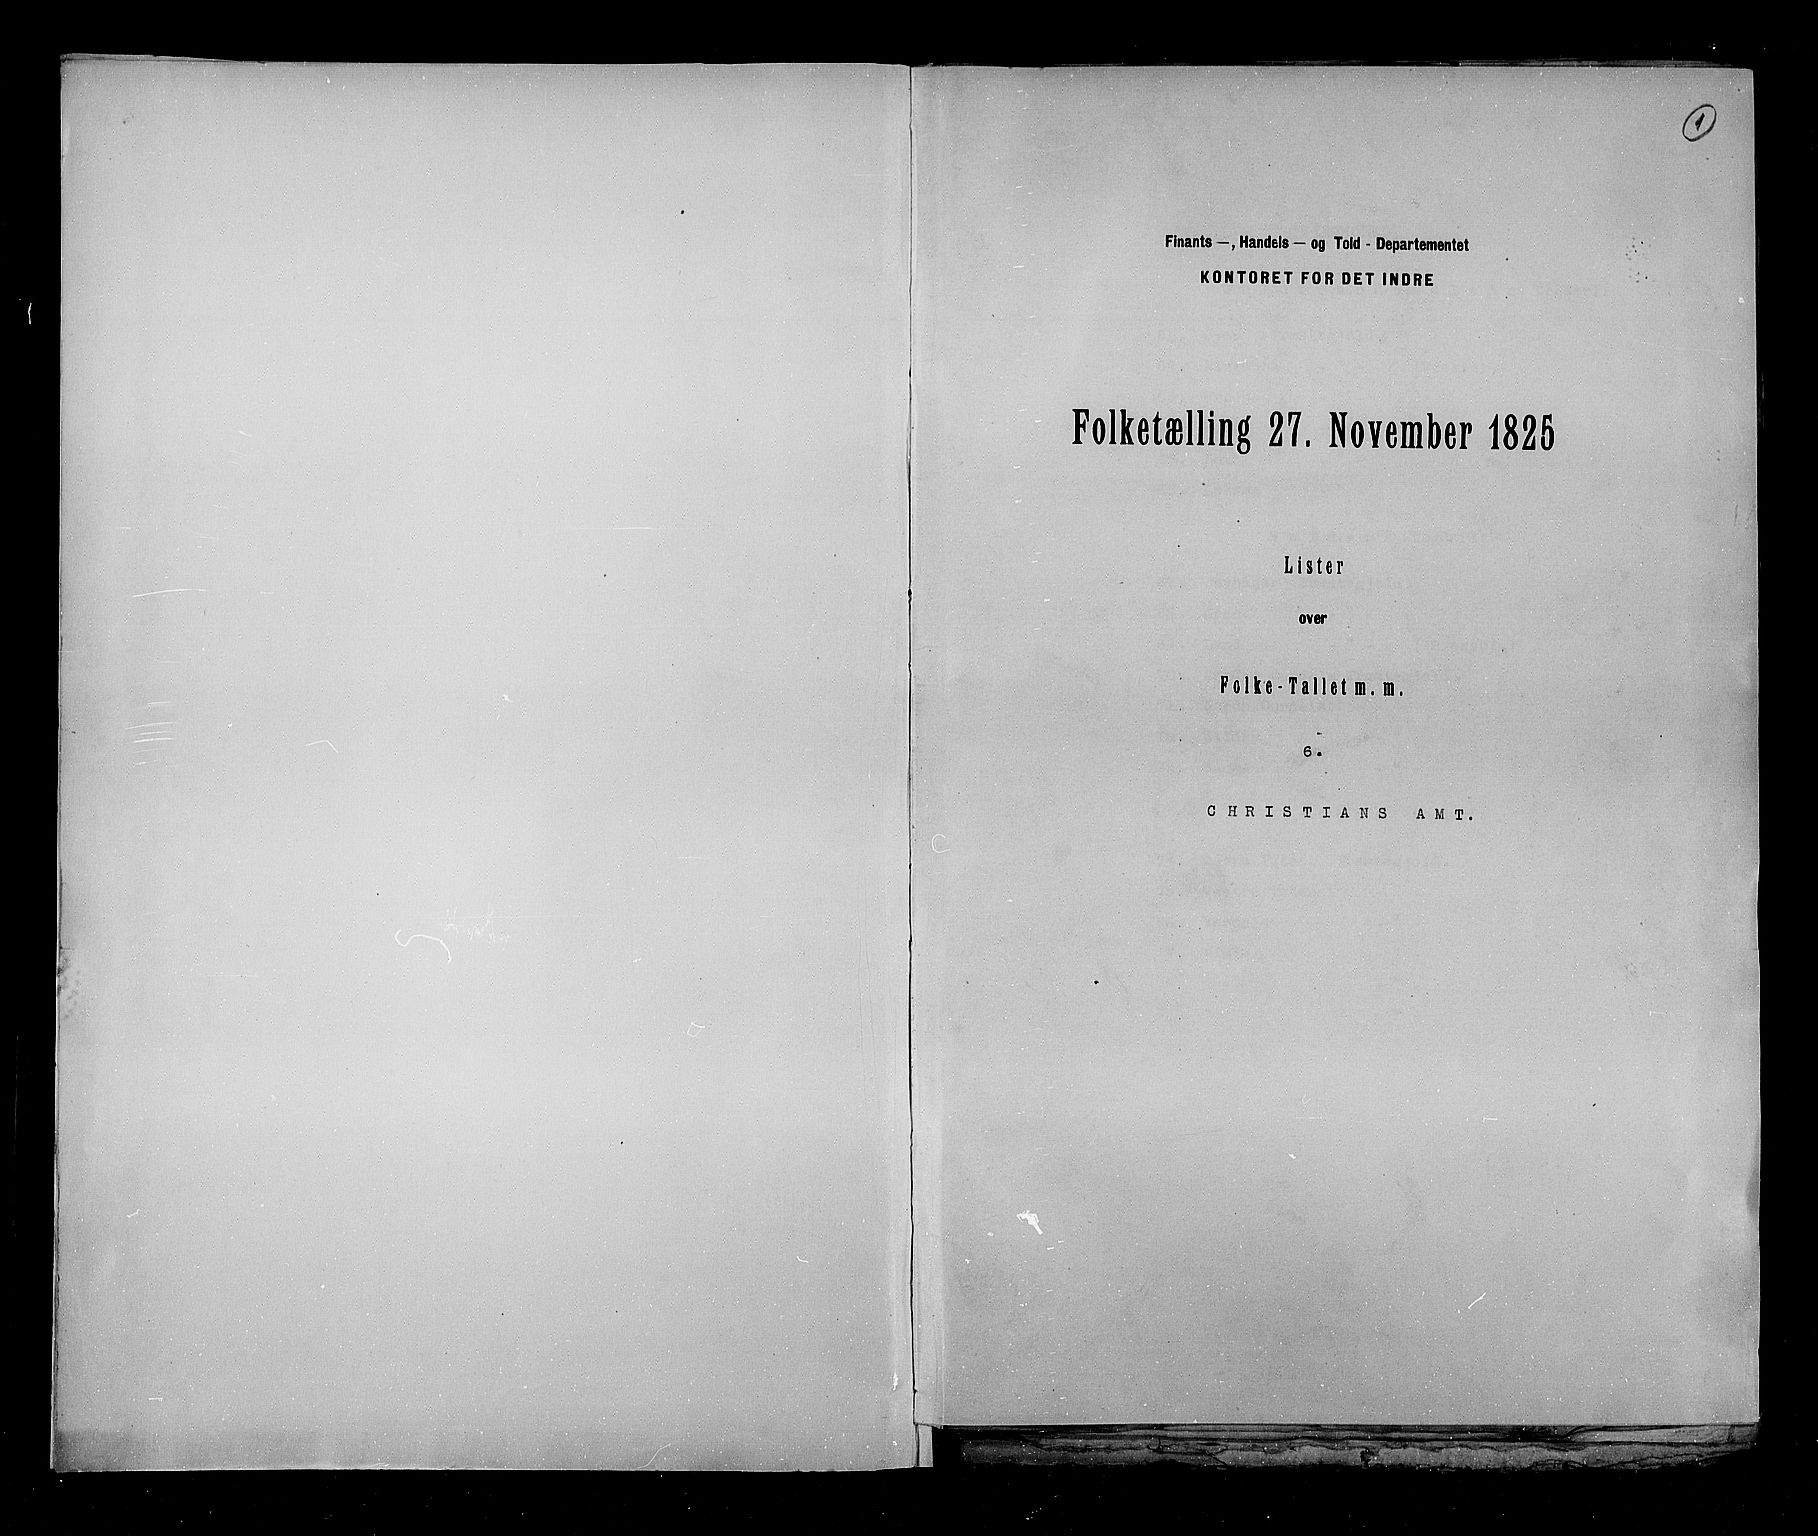 RA, Folketellingen 1825, bind 6: Kristians amt, 1825, s. 1